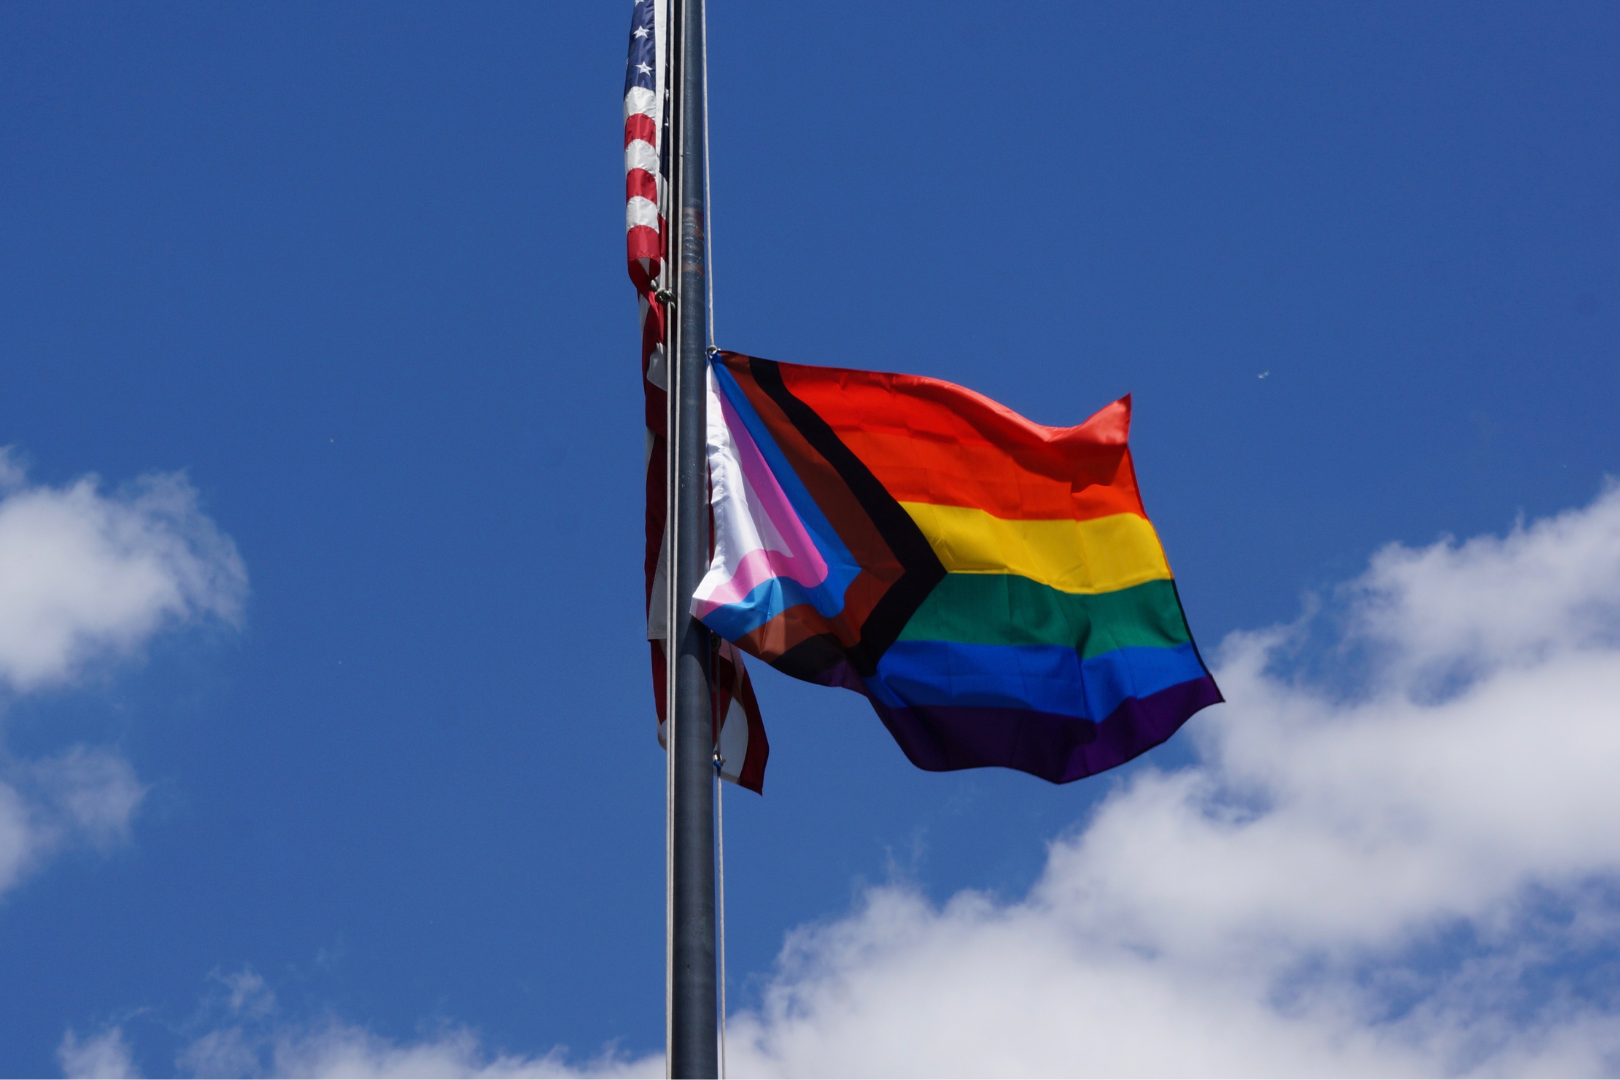 Progress Pride Flag waving at General Mills